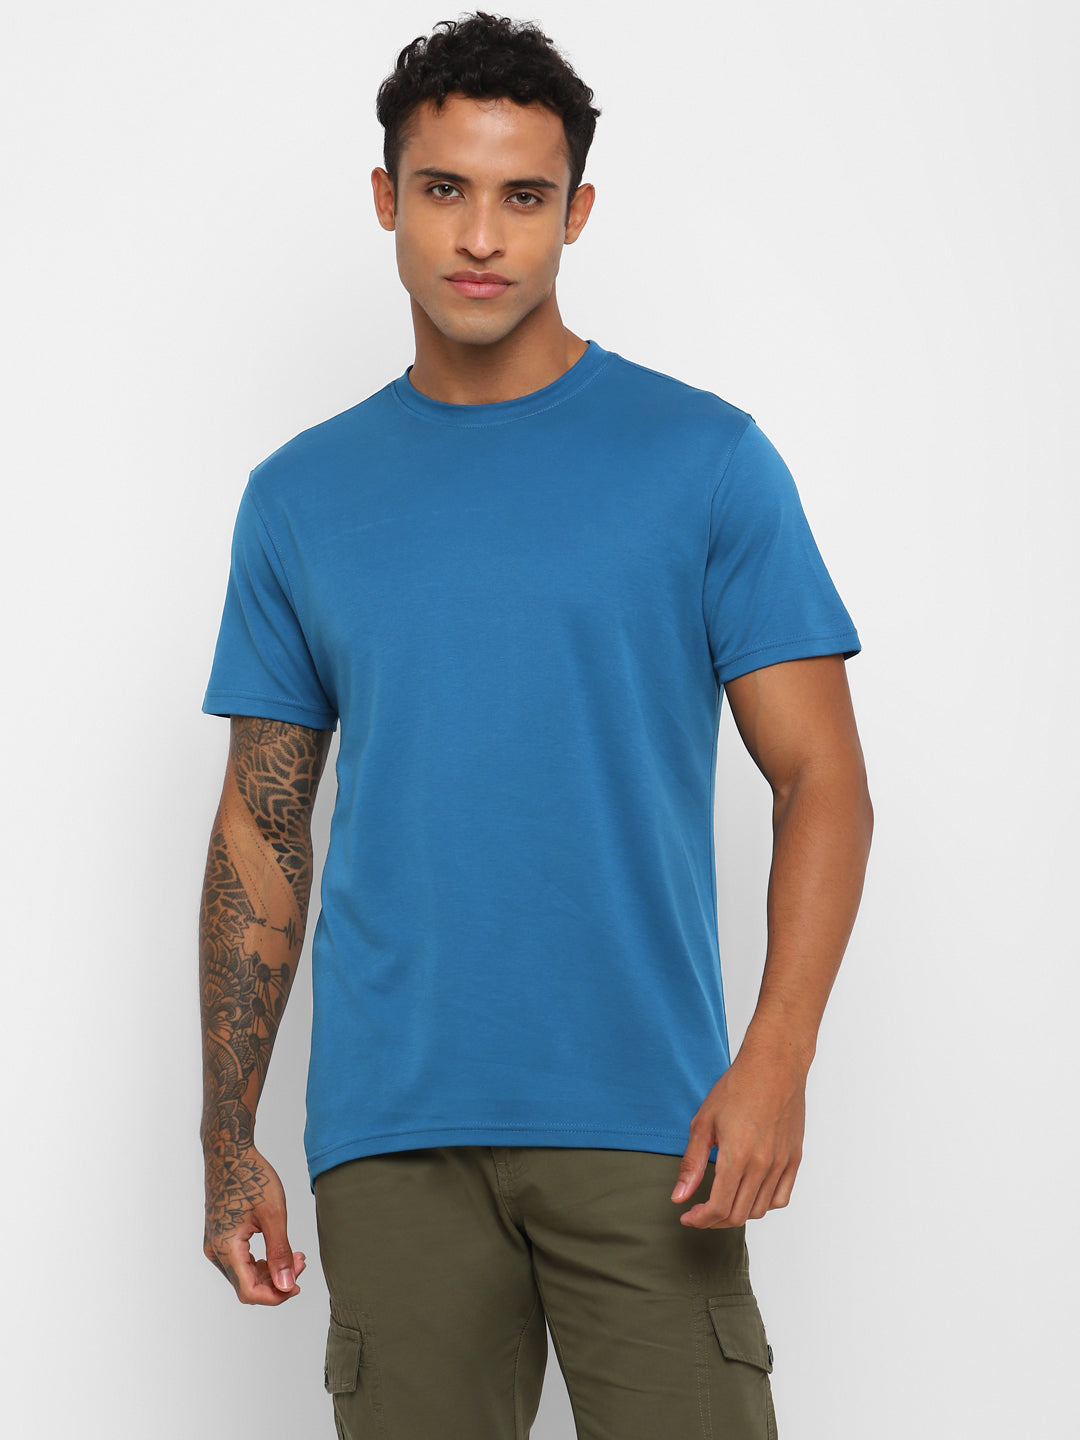 Supima Cotton Round Neck T-Shirt for Men - Sea Blue